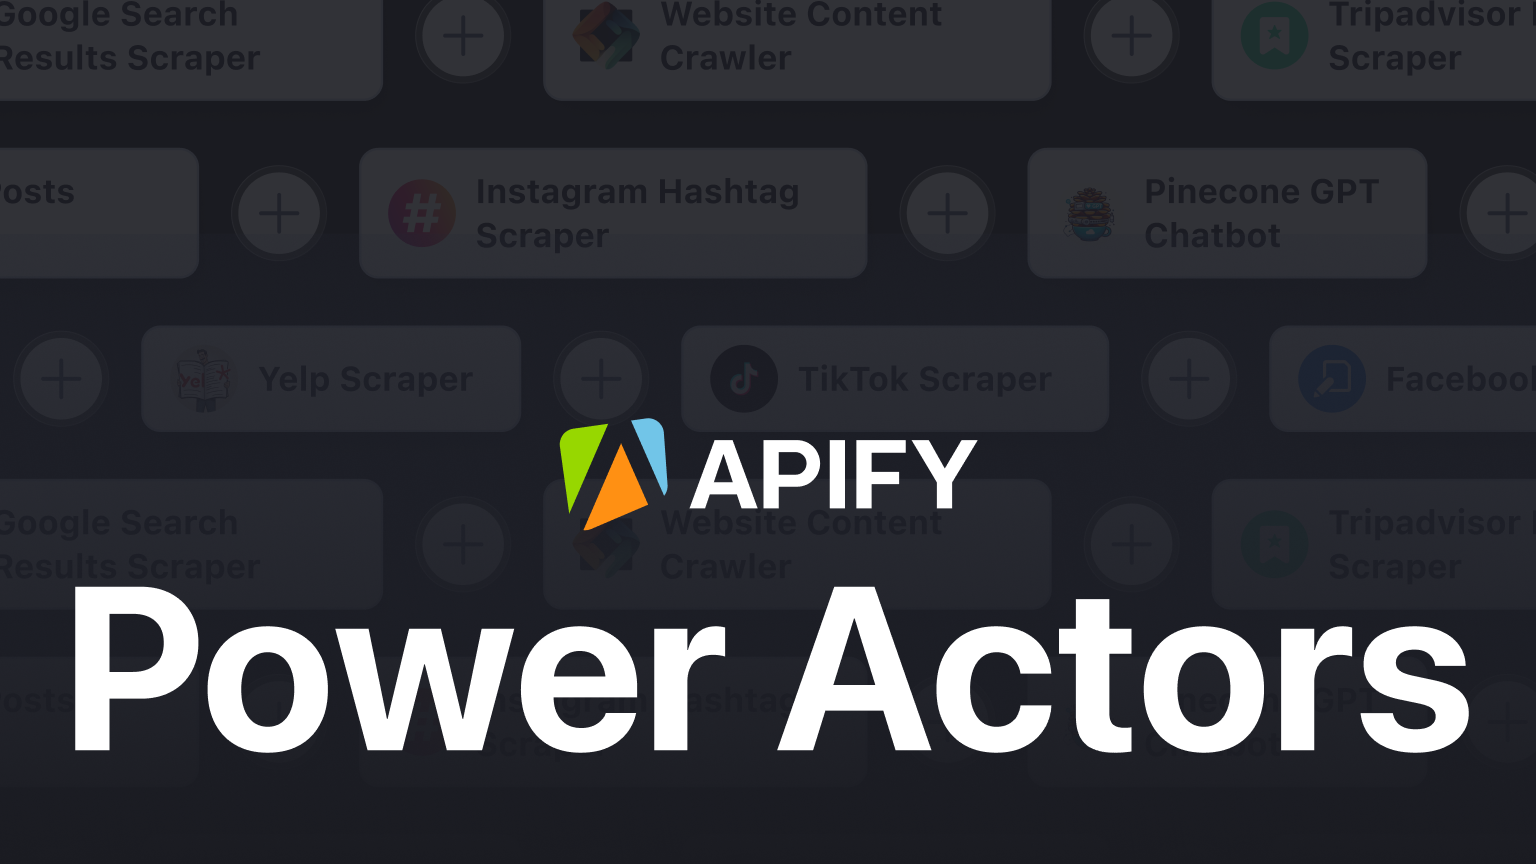 Apify Power Actors move Actors to the next level